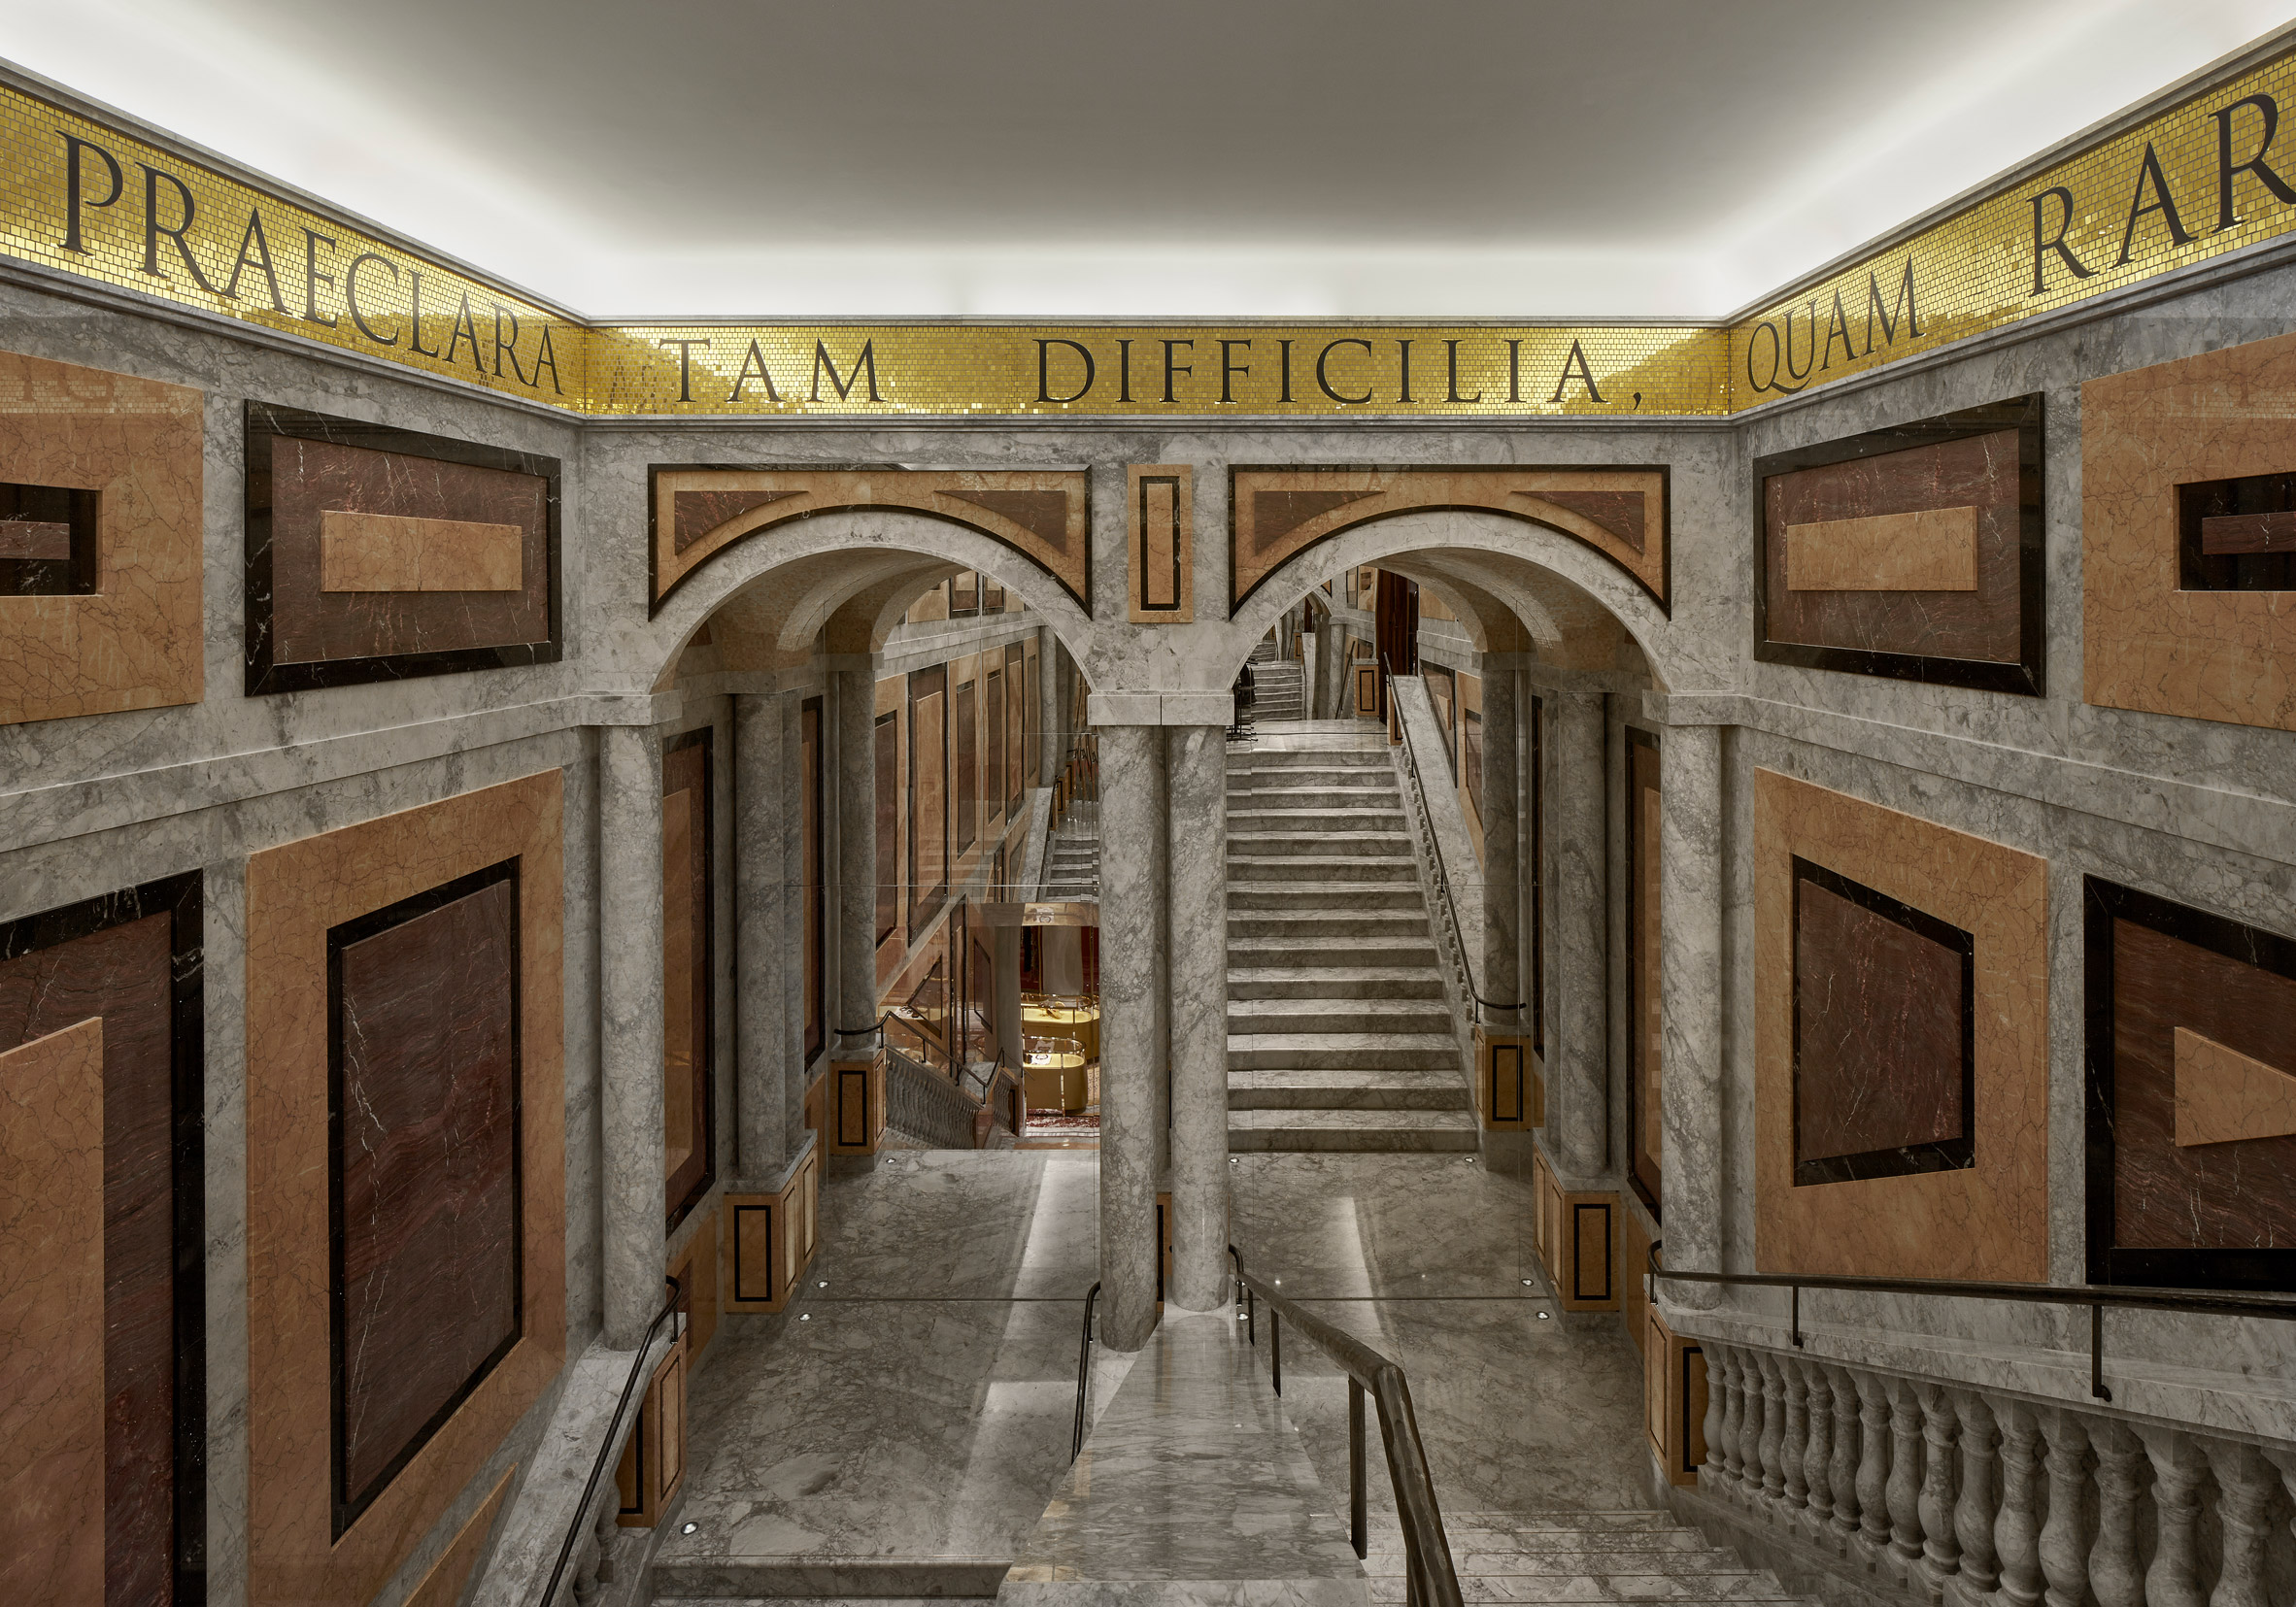 Dolce & Gabbana's Rome store features a digital fresco